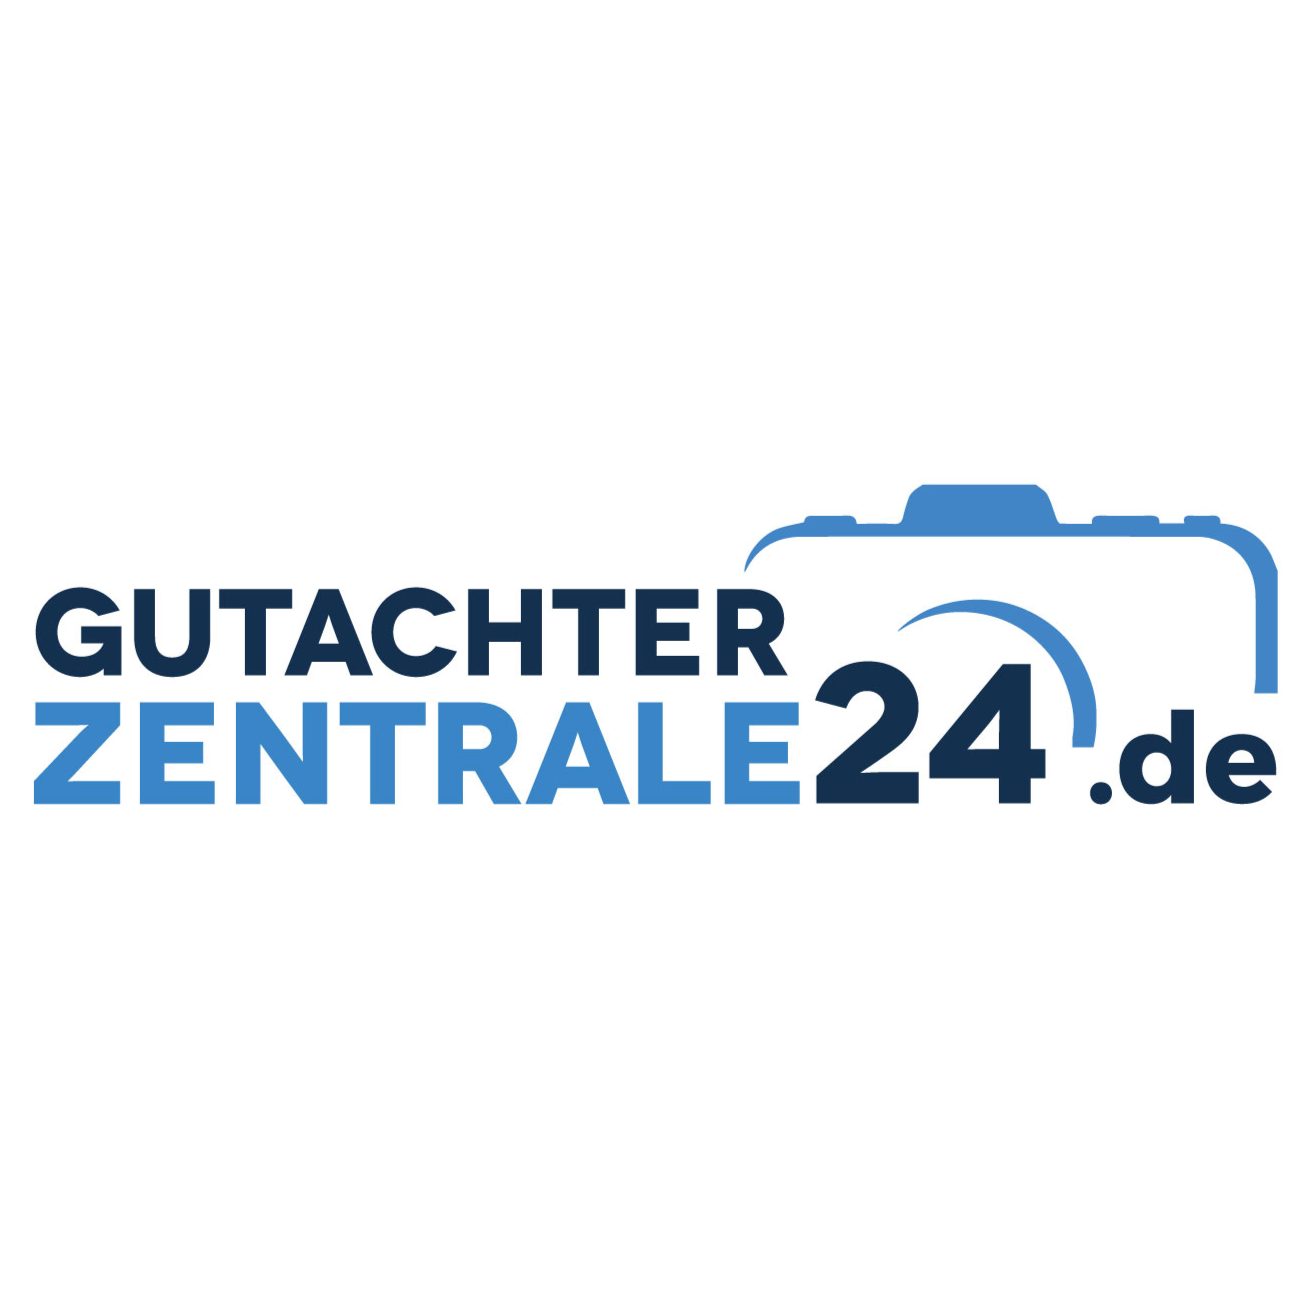 Gutachter Zentrale24 Inh. Kay Oelsen logo